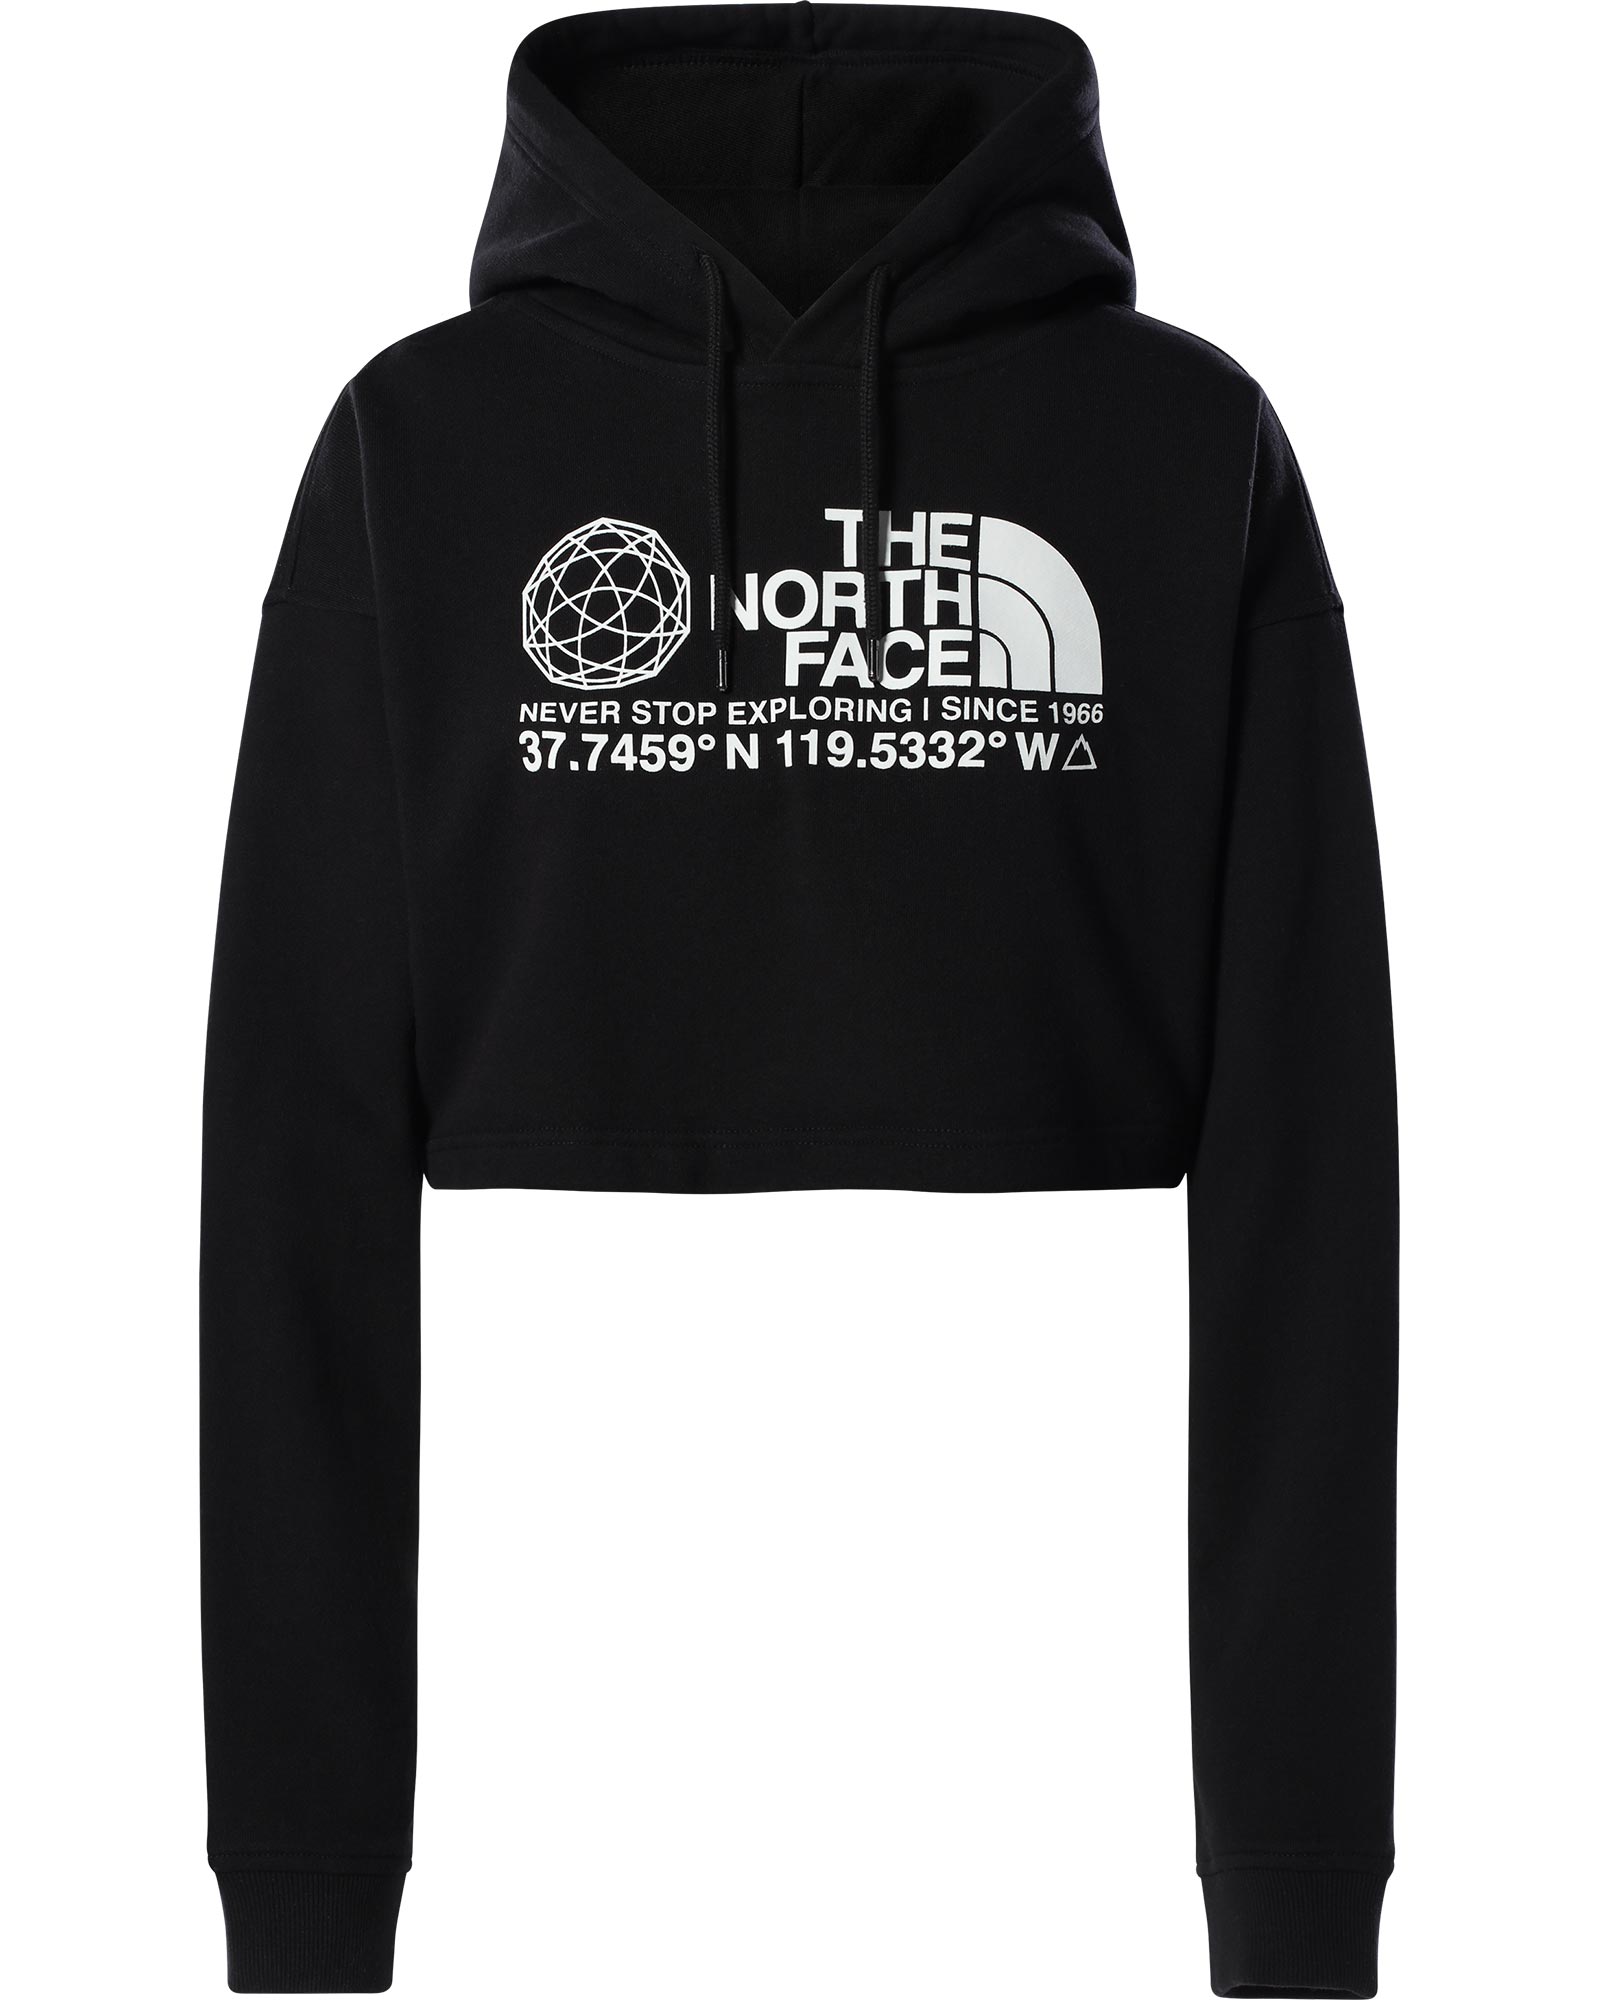 The North Face Coordinates Crop Drop Pullover Women’s Hoodie - TNF Black XL